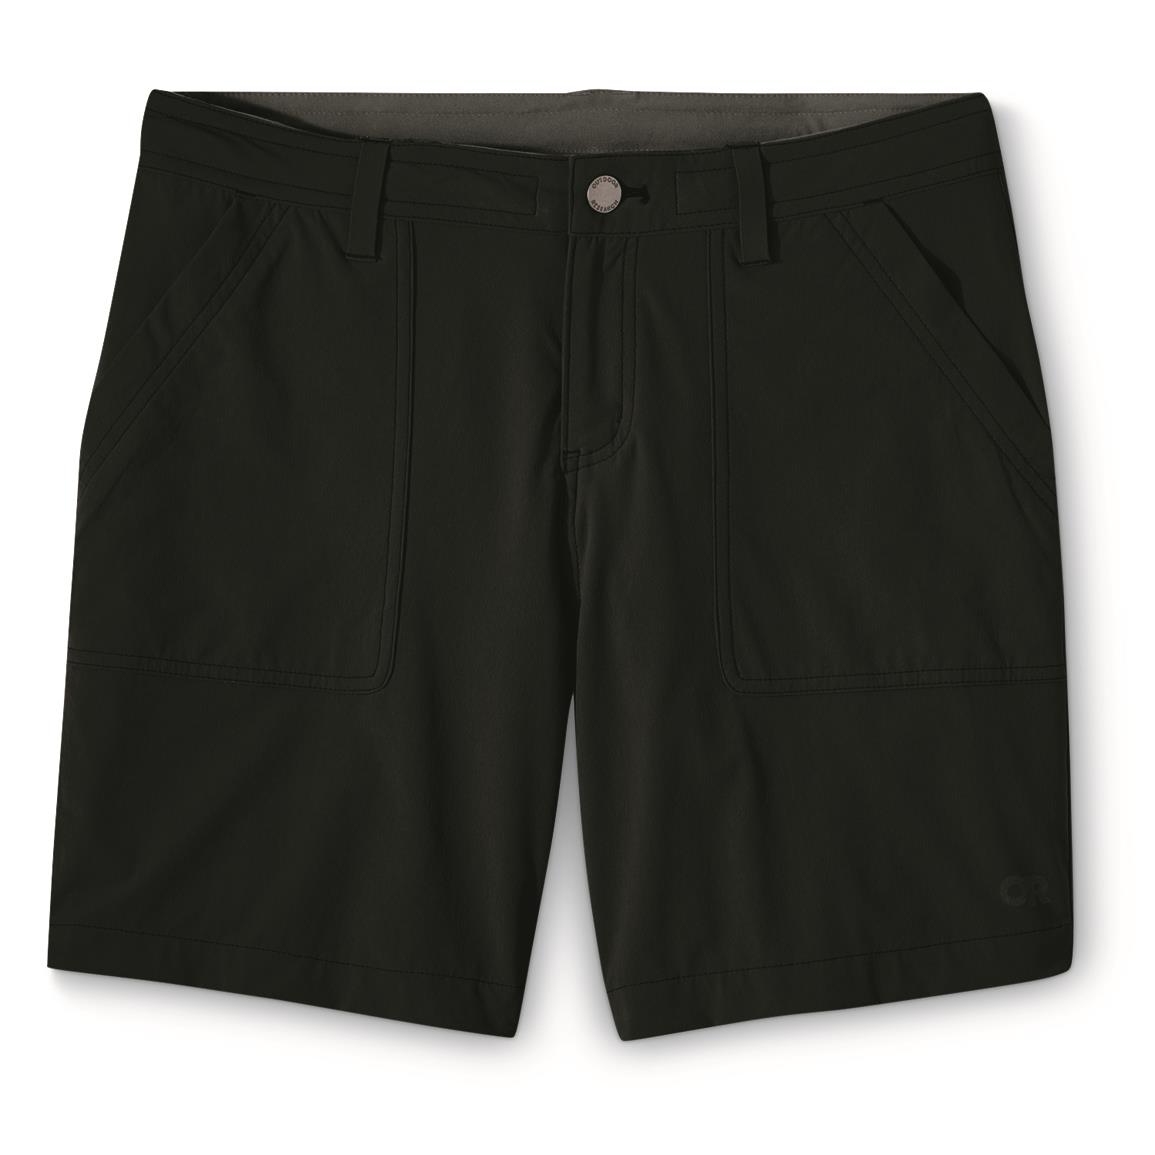 Outdoor Research Women's Ferrosi Shorts, 7" Inseam, Black